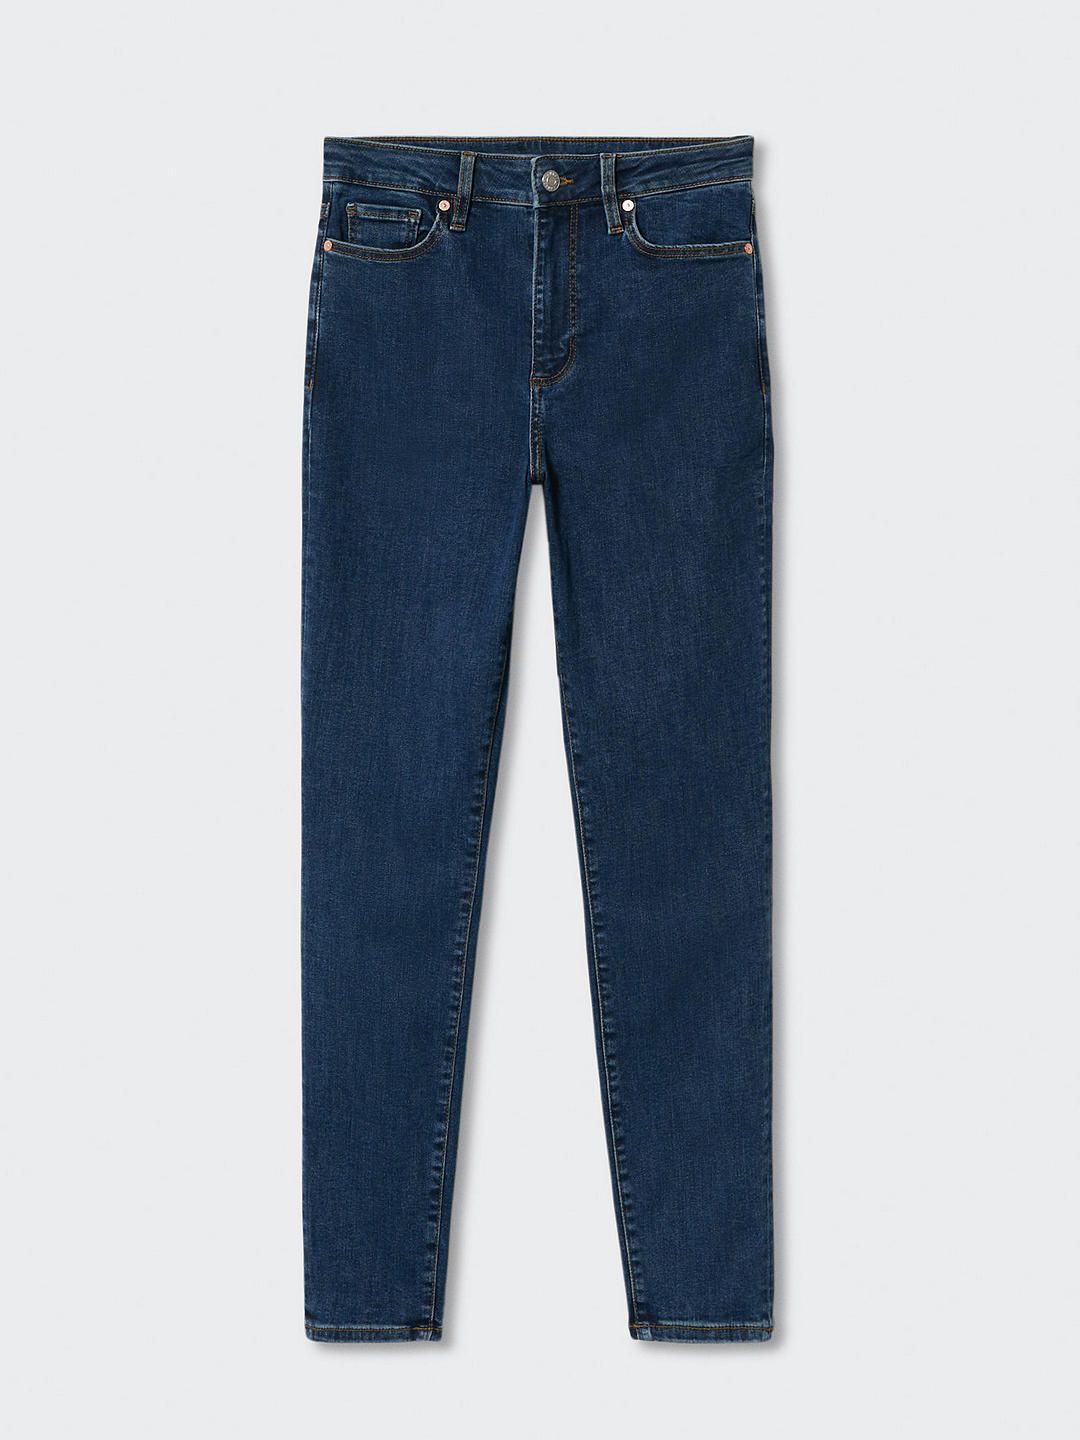 IMS Petite Dark Blue Skinny Jeans